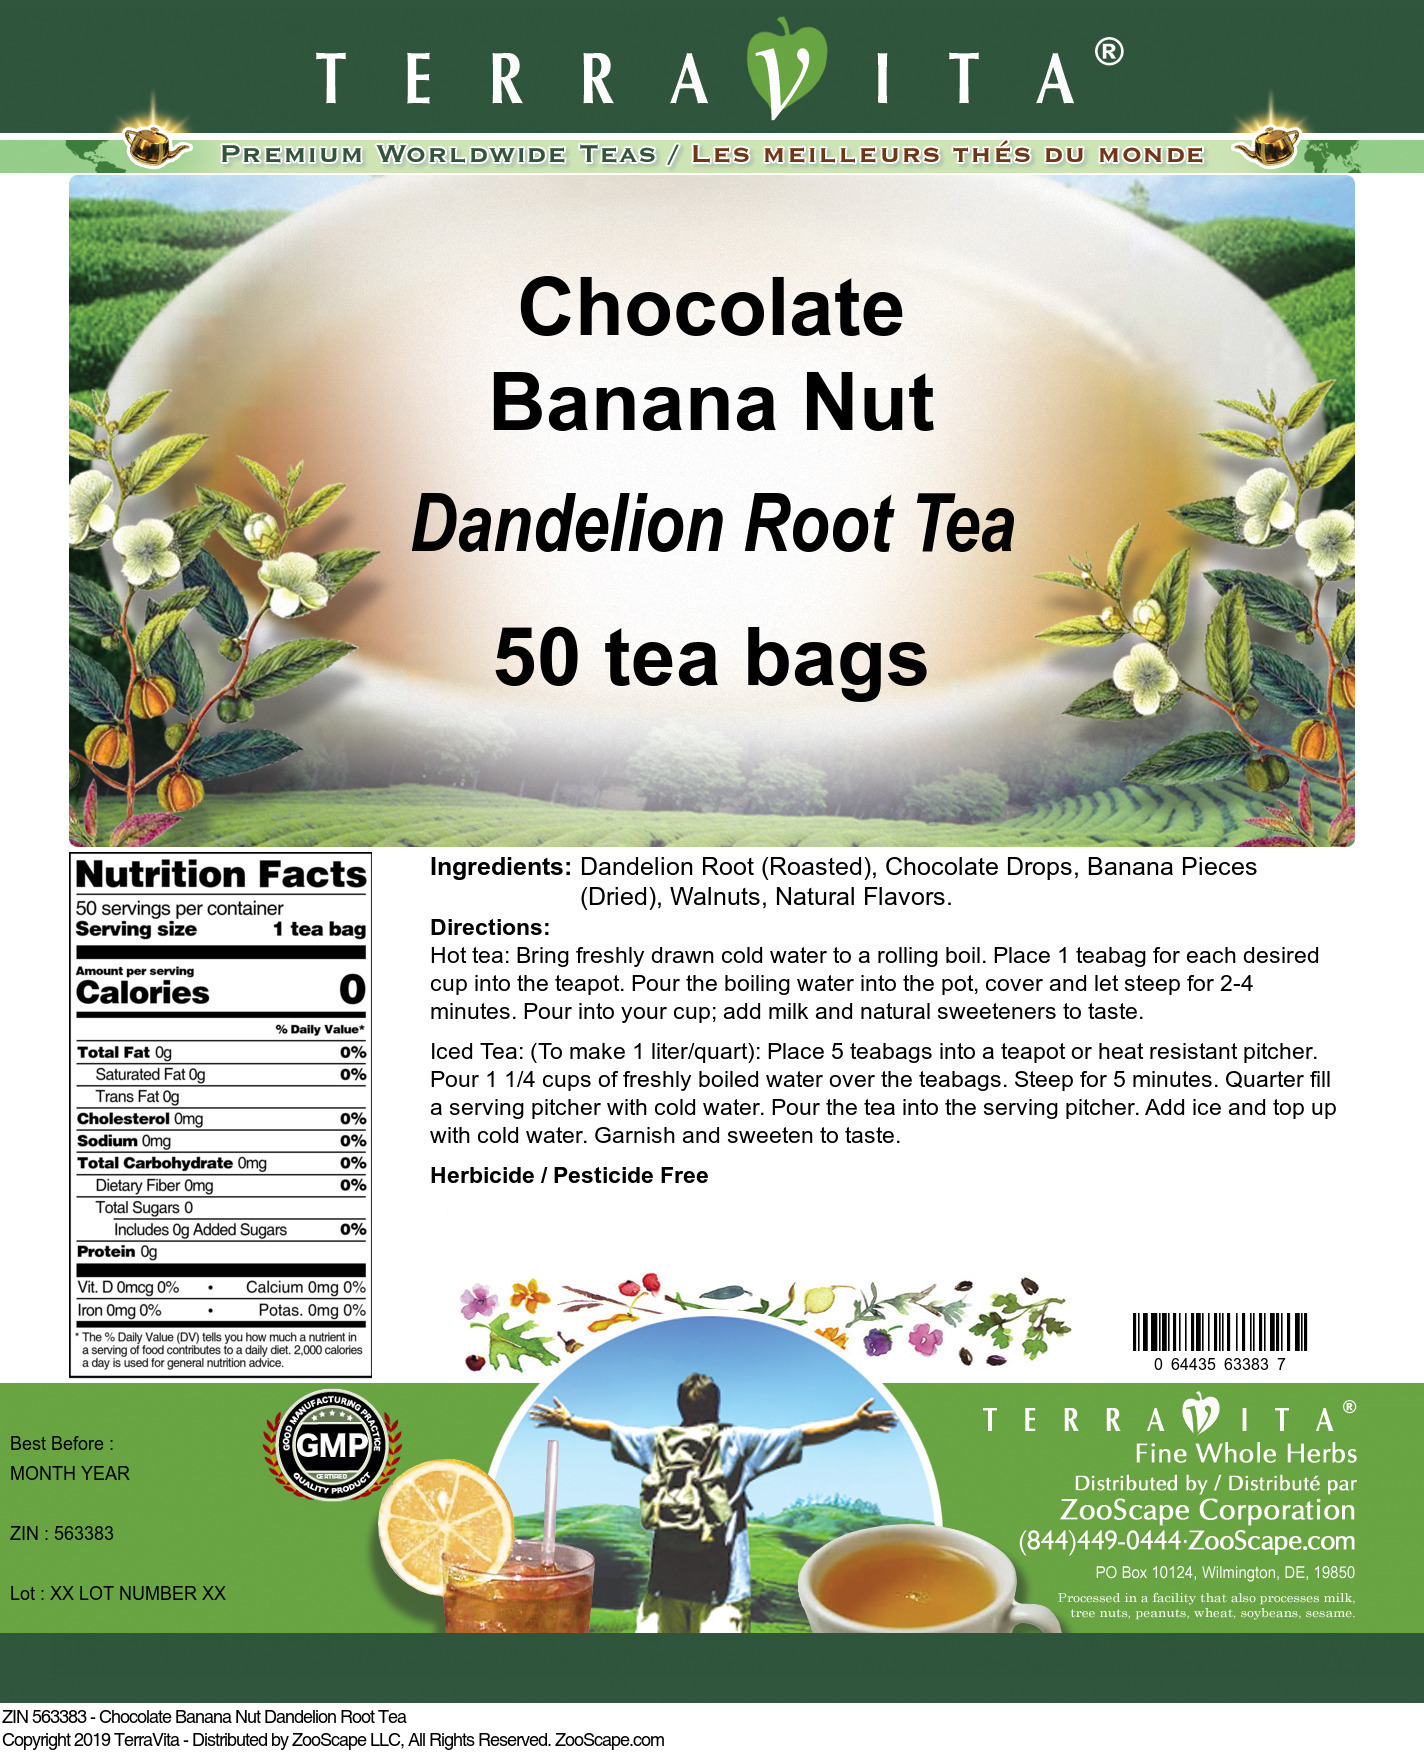 Chocolate Banana Nut Dandelion Root Tea - Label